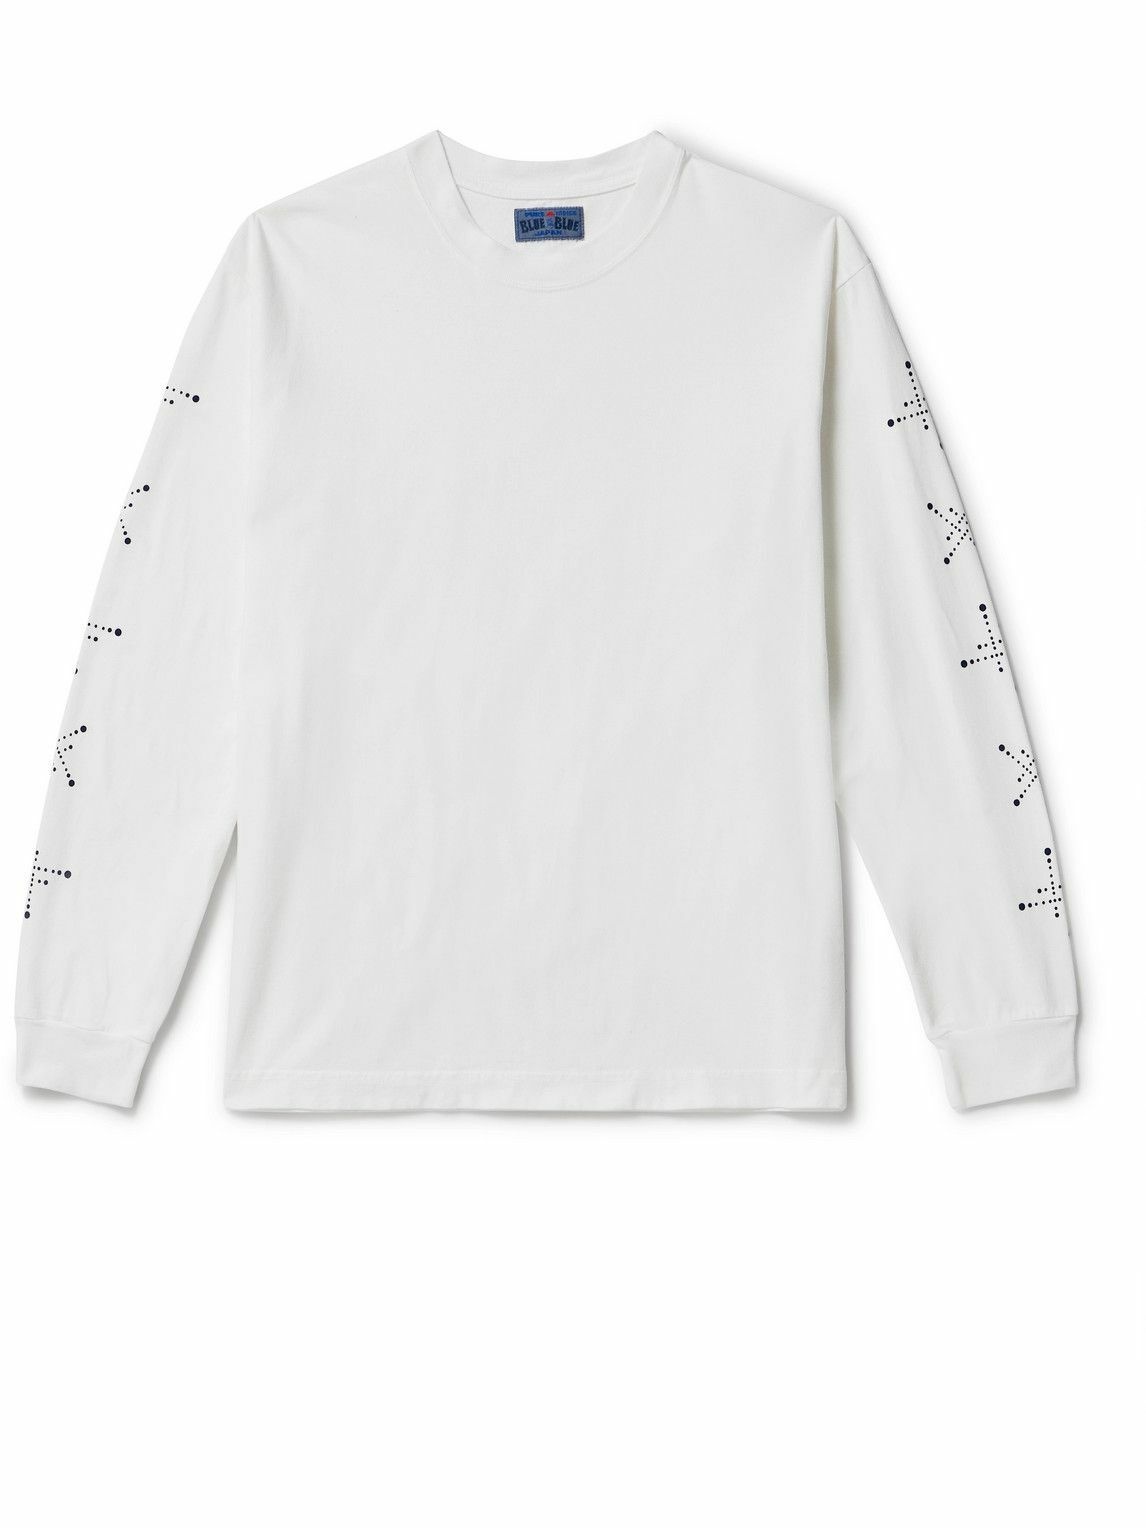 Photo: Blue Blue Japan - Kobolevi Sleeve-Printed Cotton-Jersey T-Shirt - White